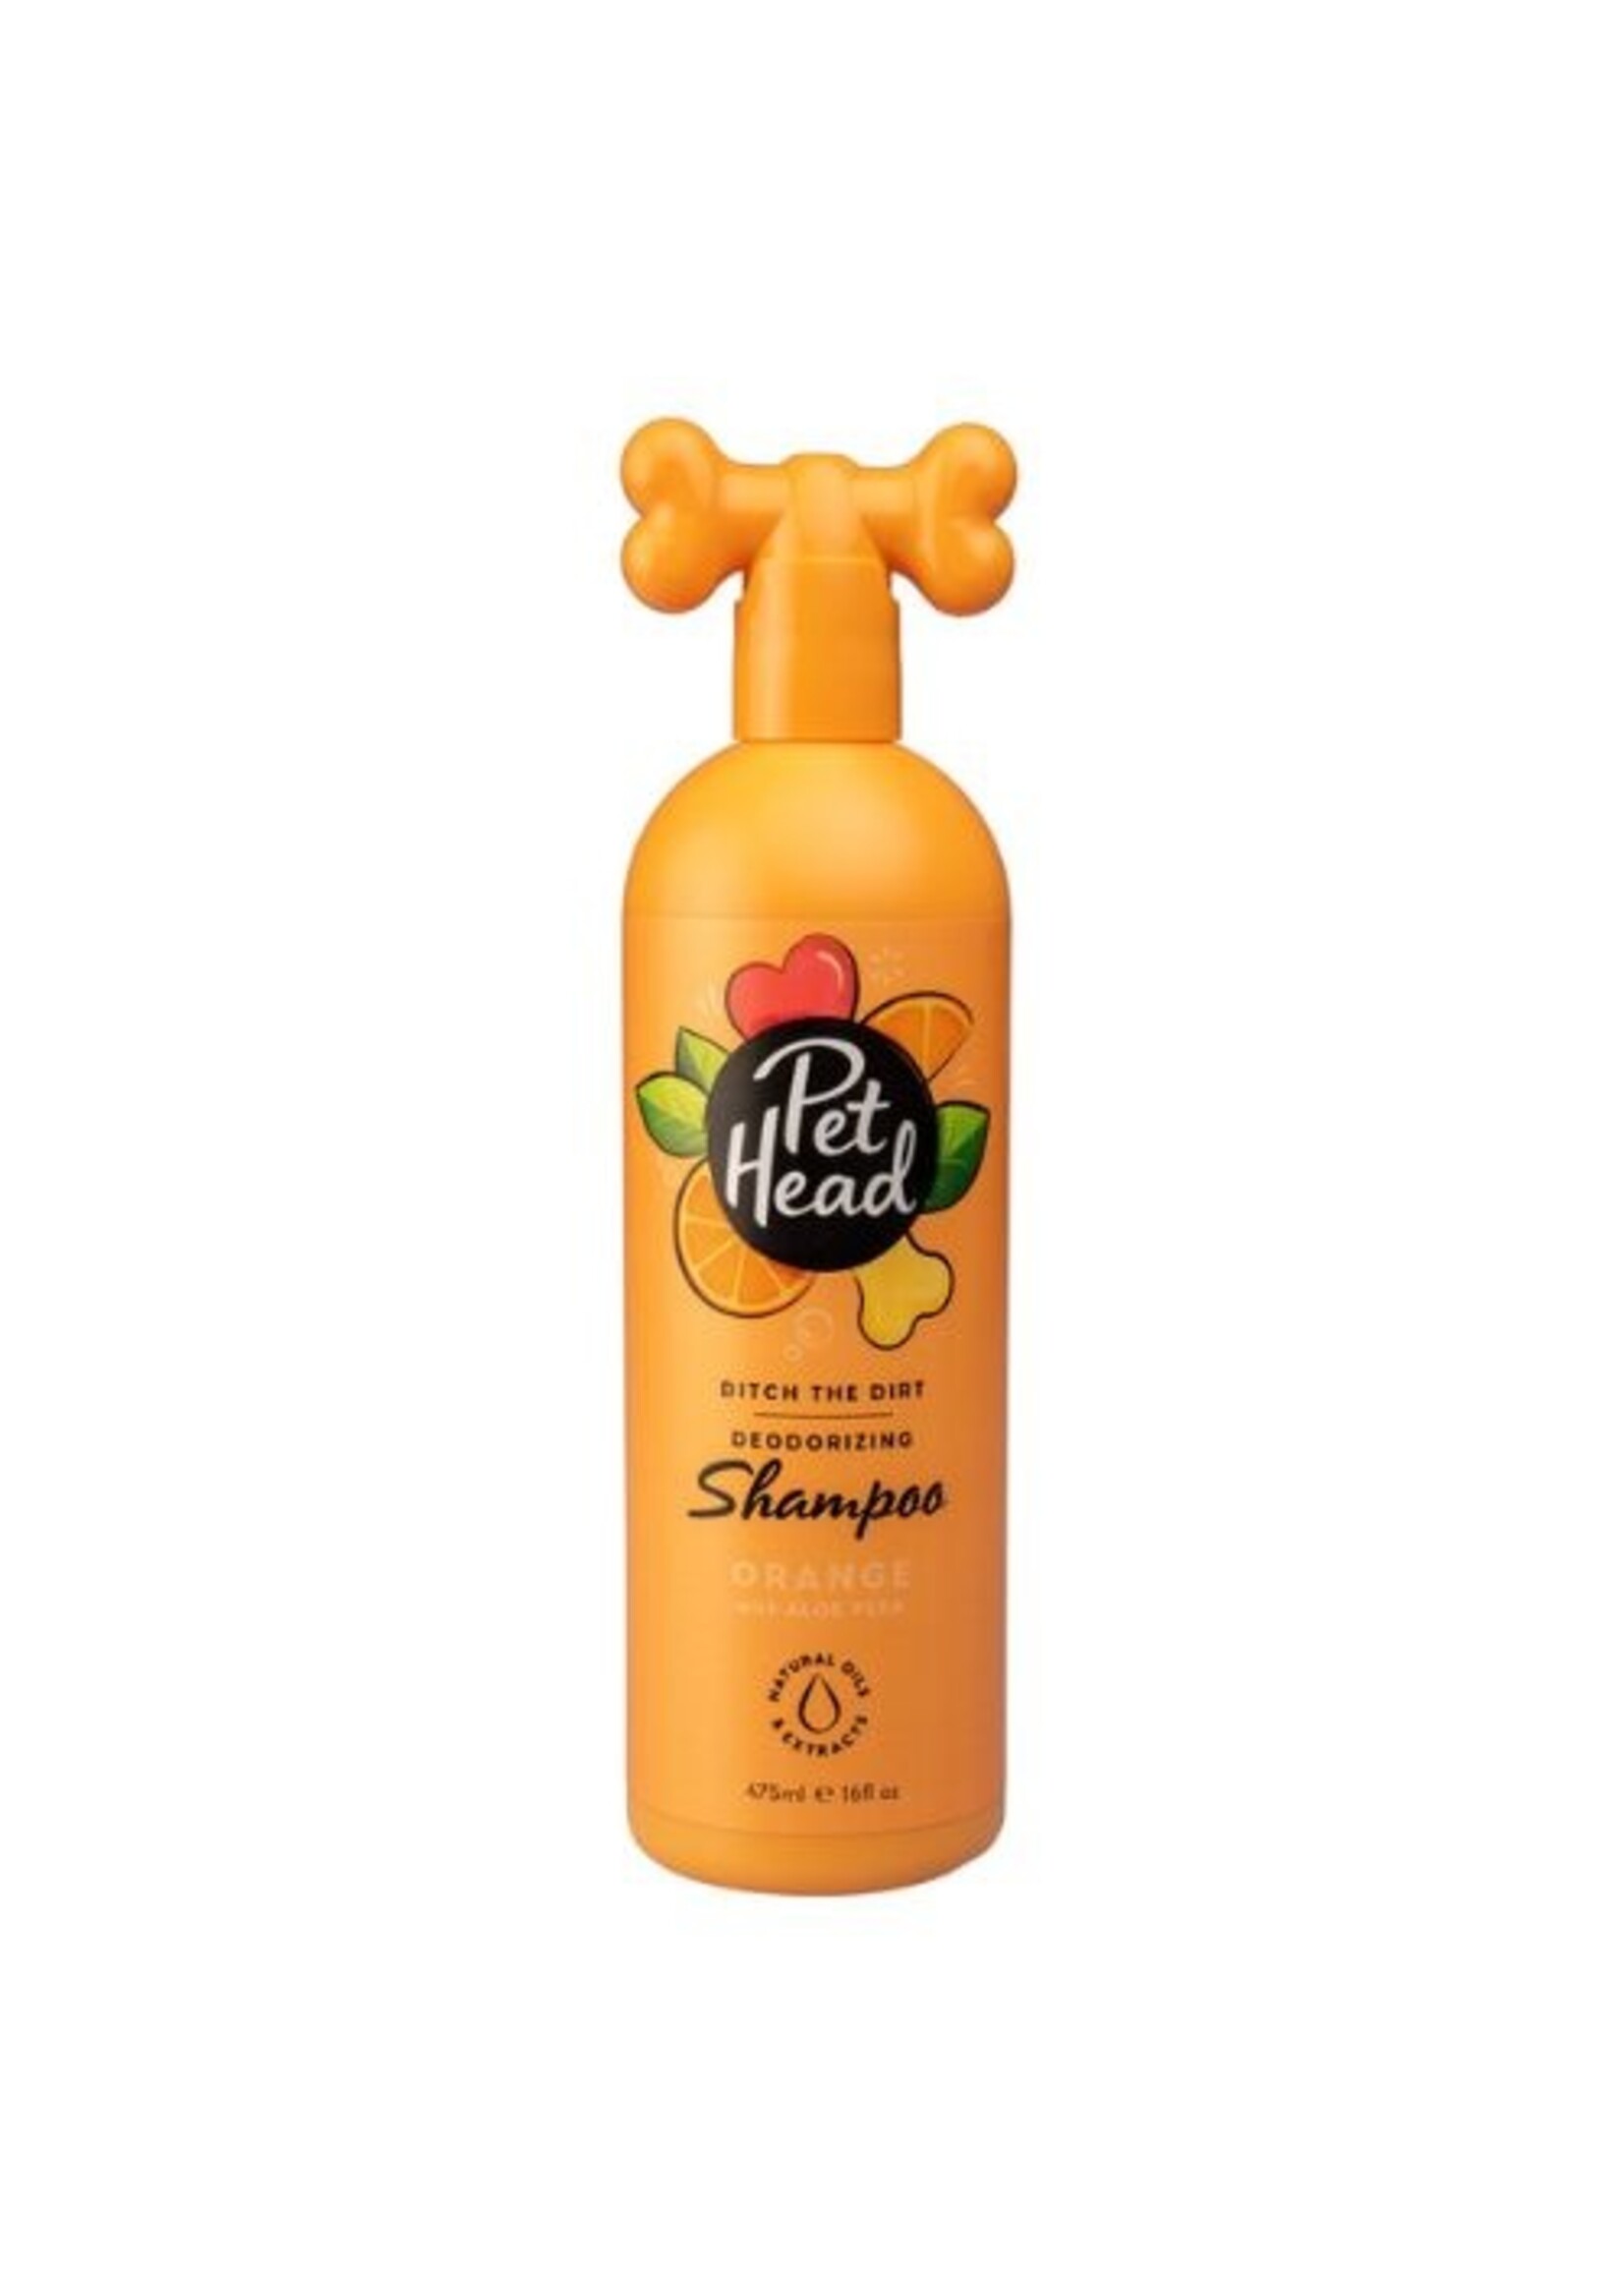 Pet Head Pet Head Ditch the Dirt Orange w/ Aloe Vera